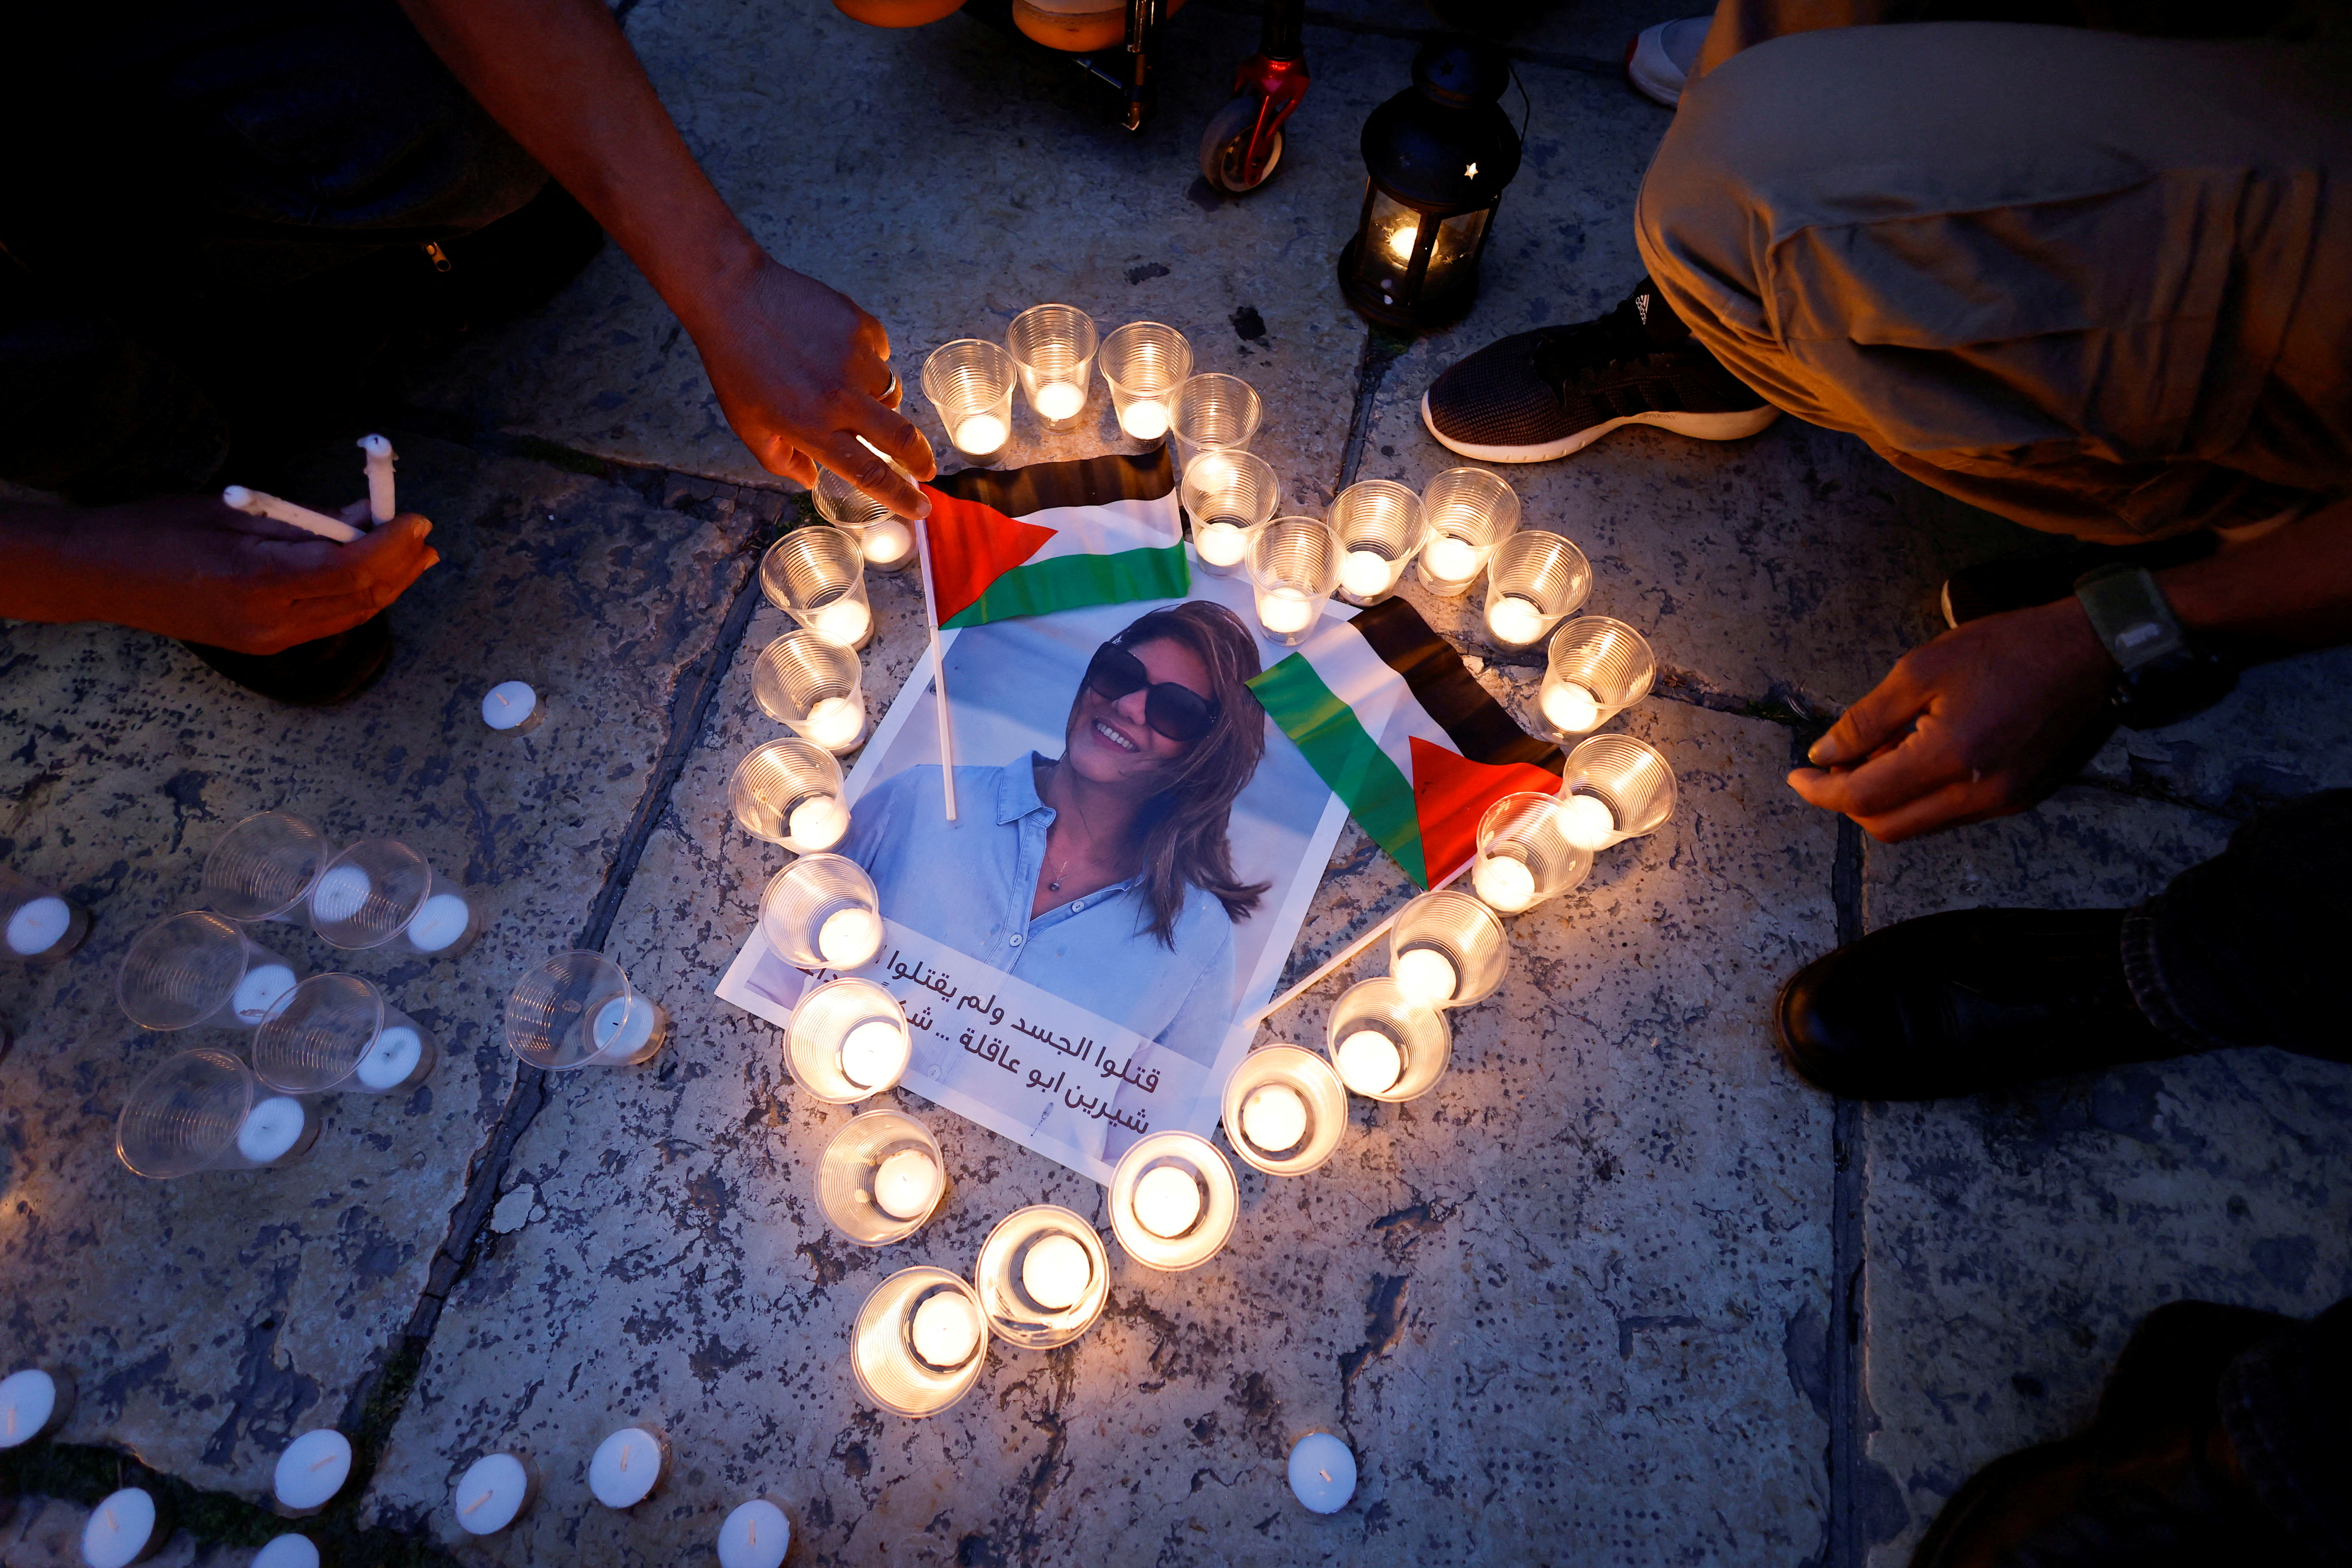 Vigil in memory of Al Jazeera journalist Shireen Abu Akleh in Bethlehem